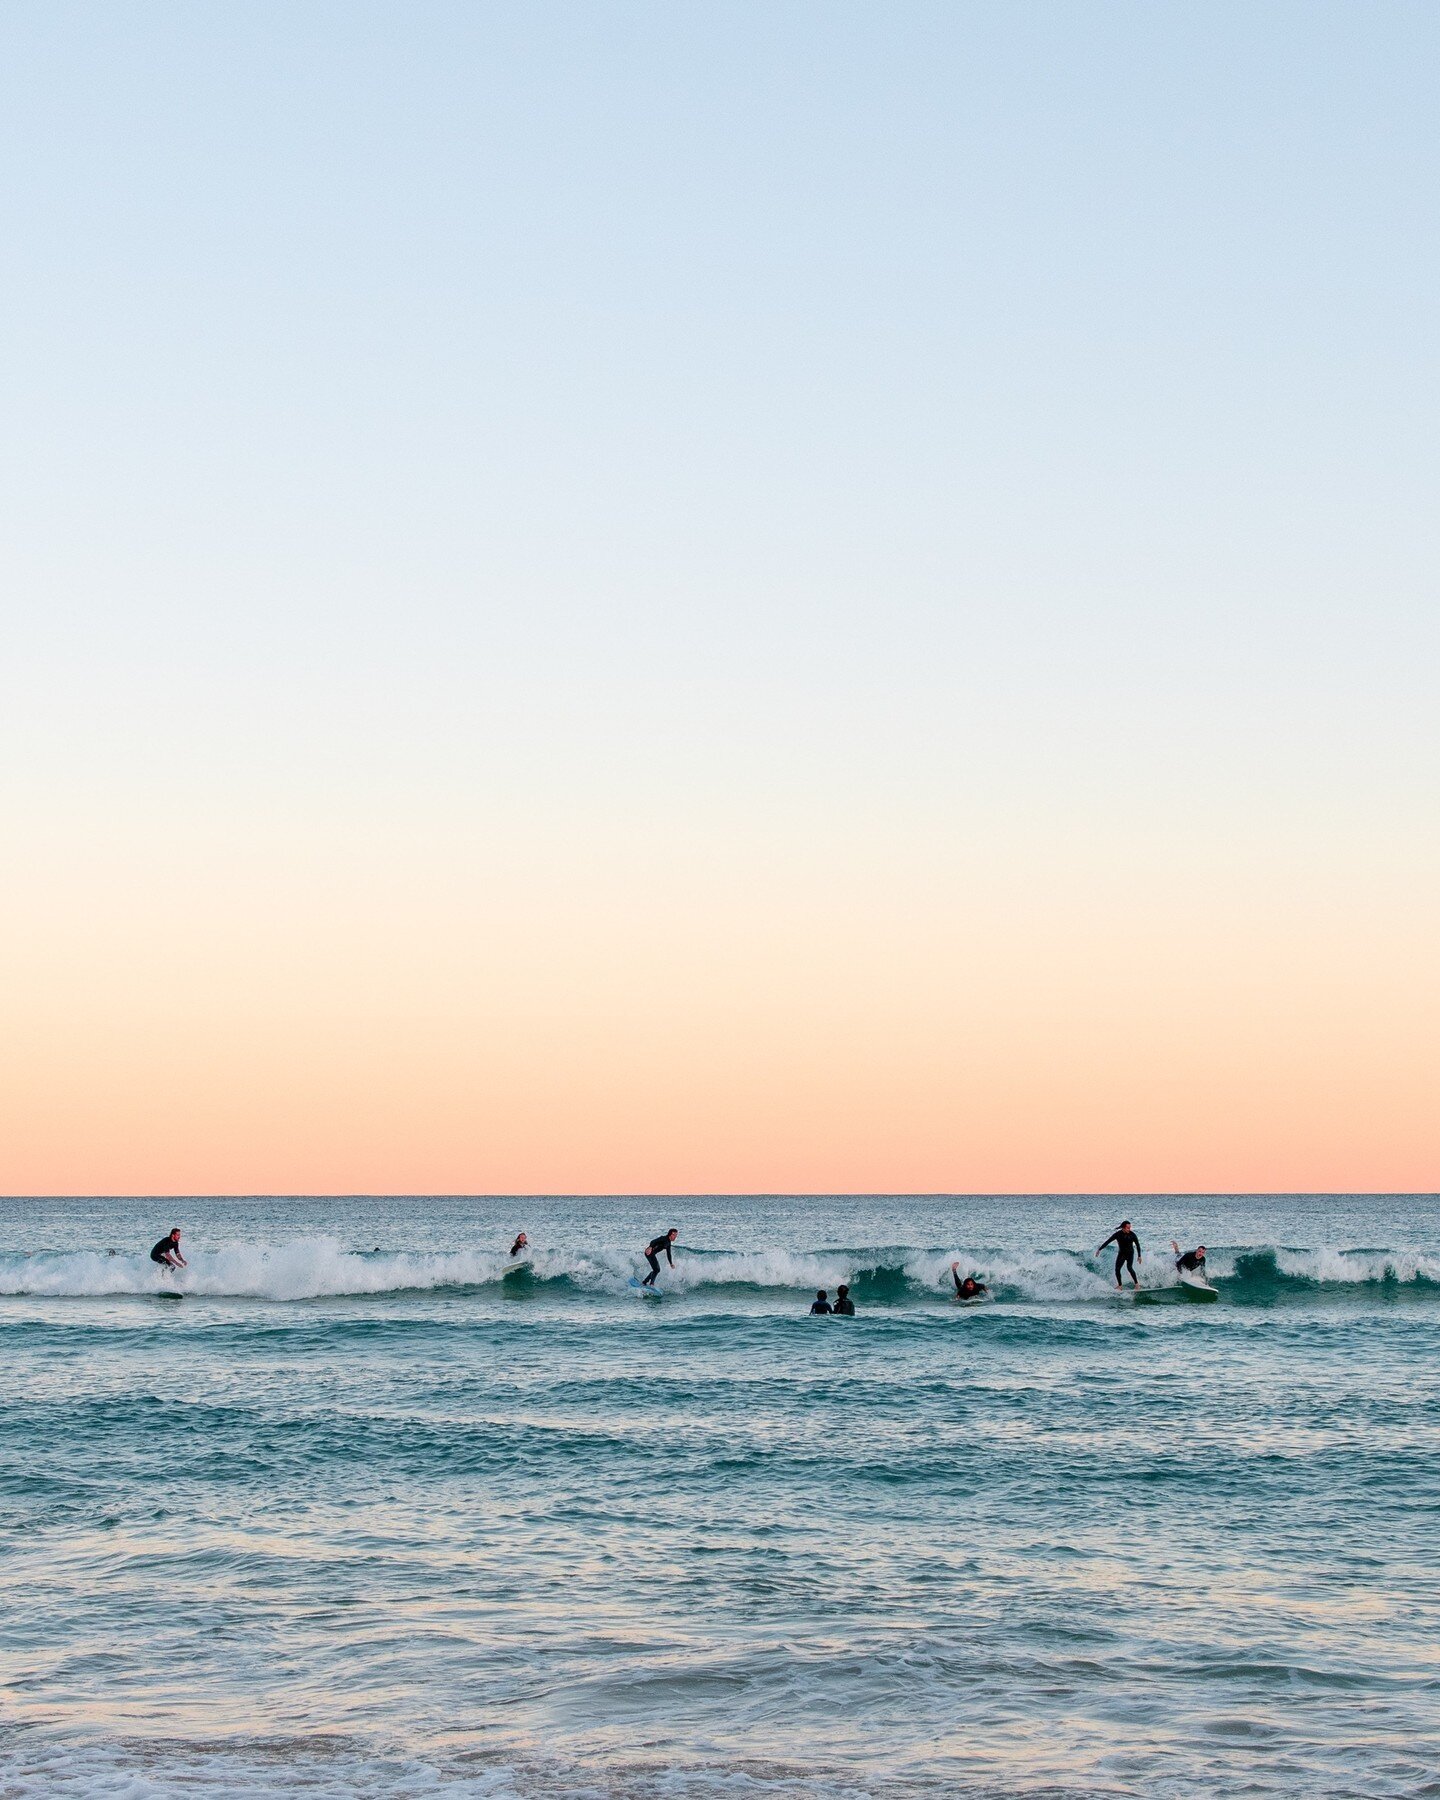 Sunset surf at one of the best beaches in Australia. #BondiBeach